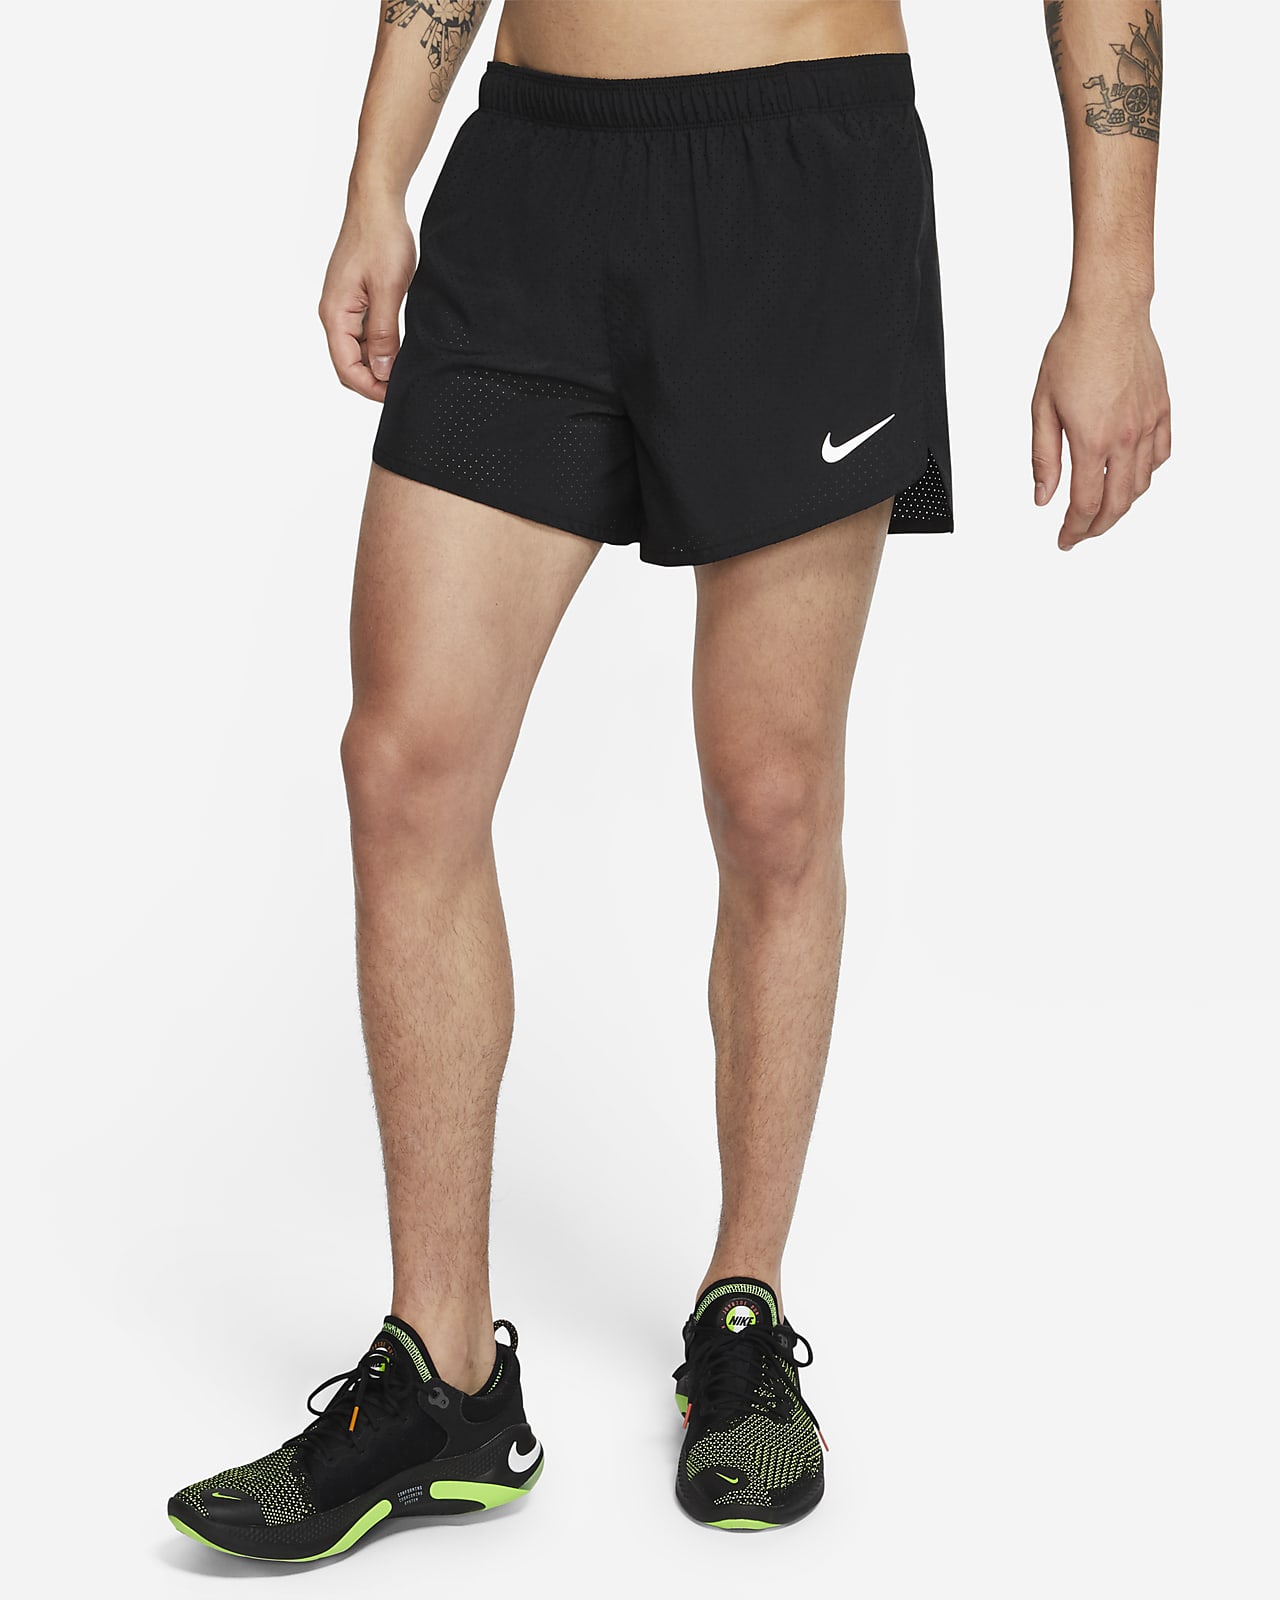 nike fast running shorts men's